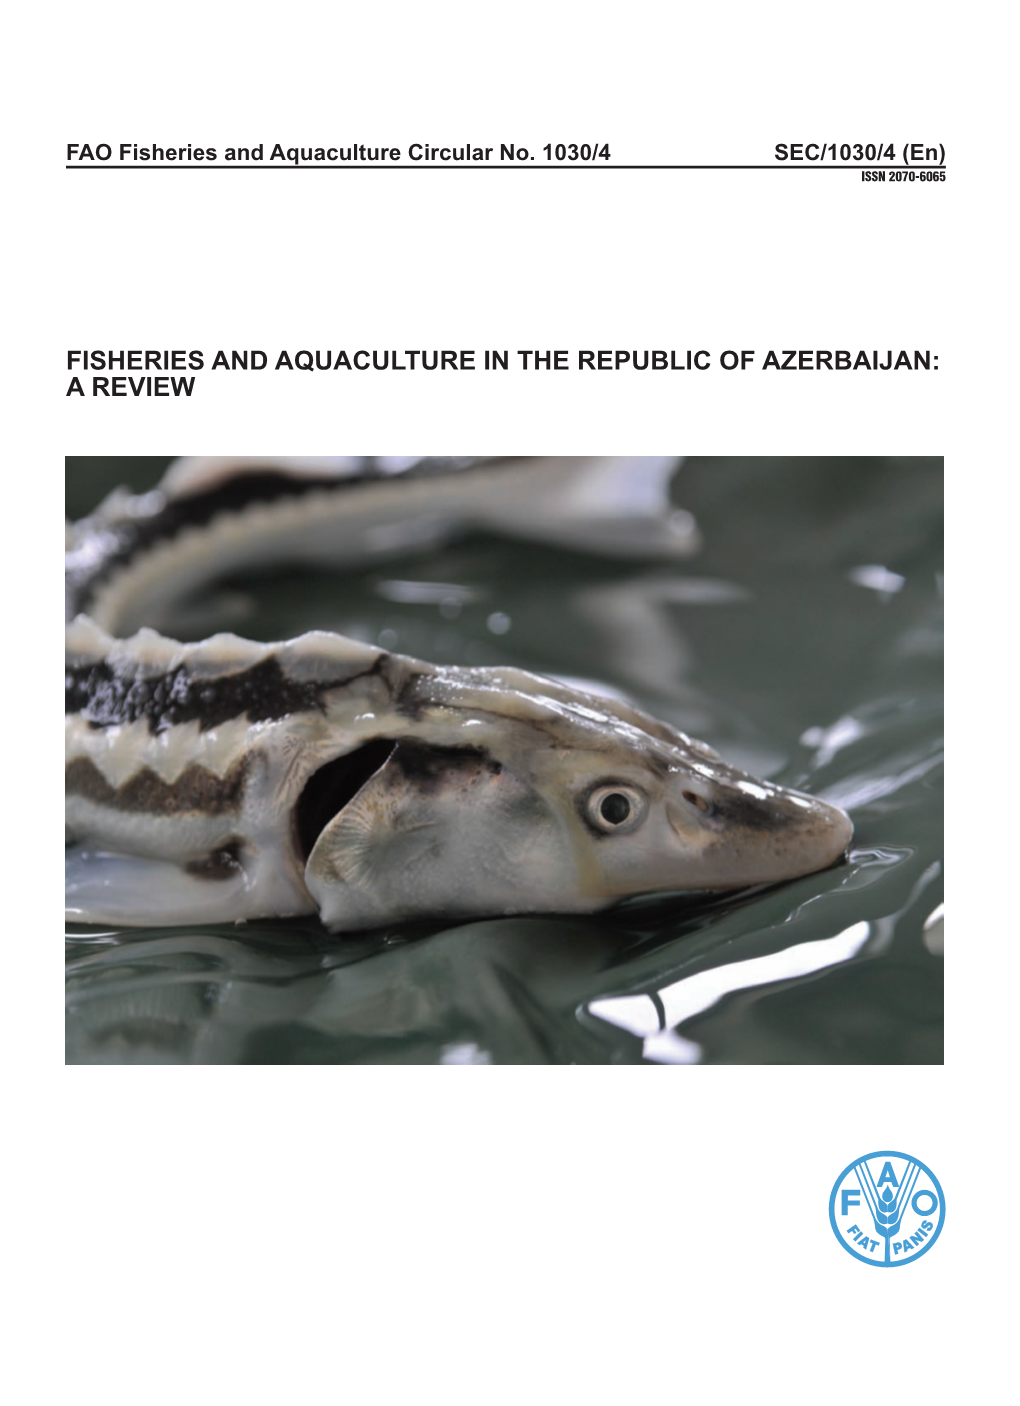 Fisheries and Aquaculture in the Republic of Azerbaijan